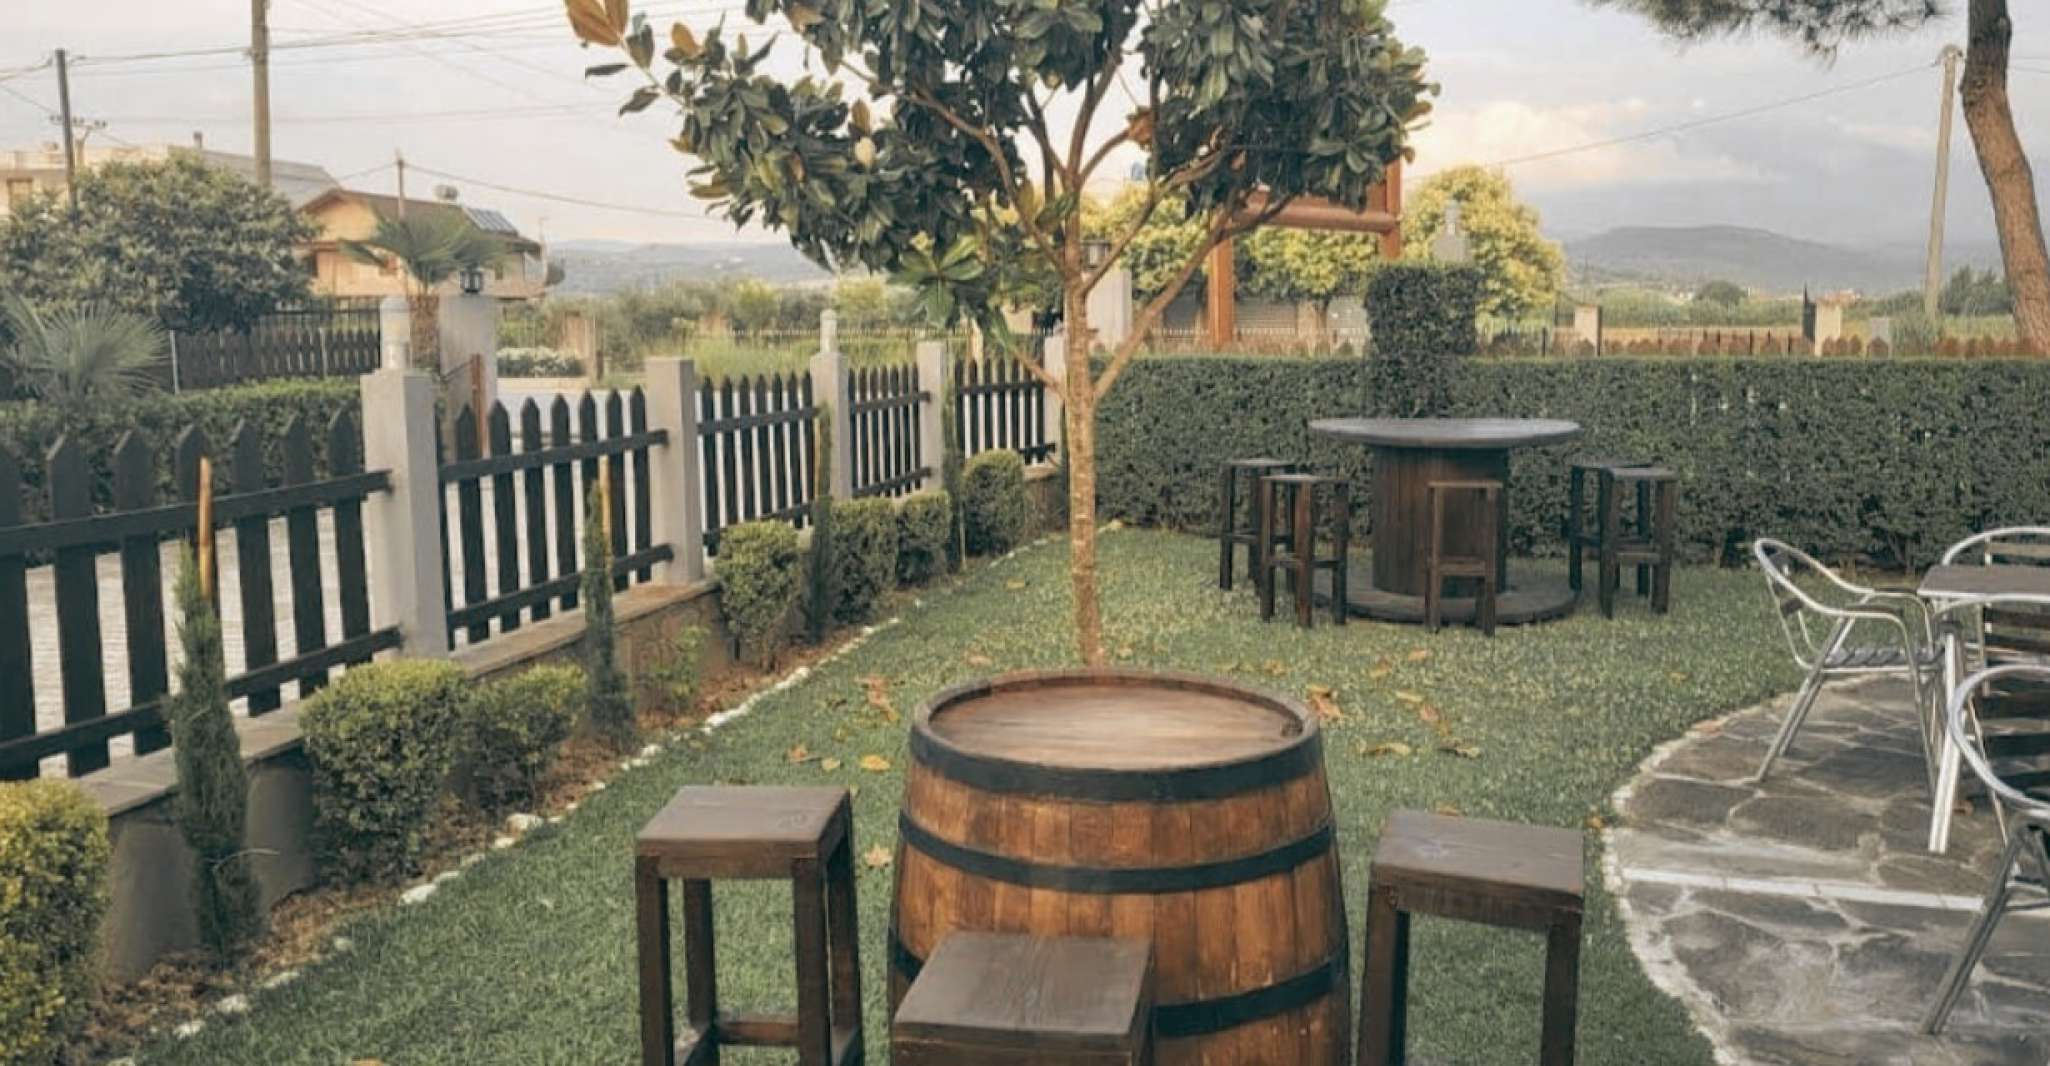 Vino & Vista, Berat's Wine Journey and Cultural Heritage - Housity